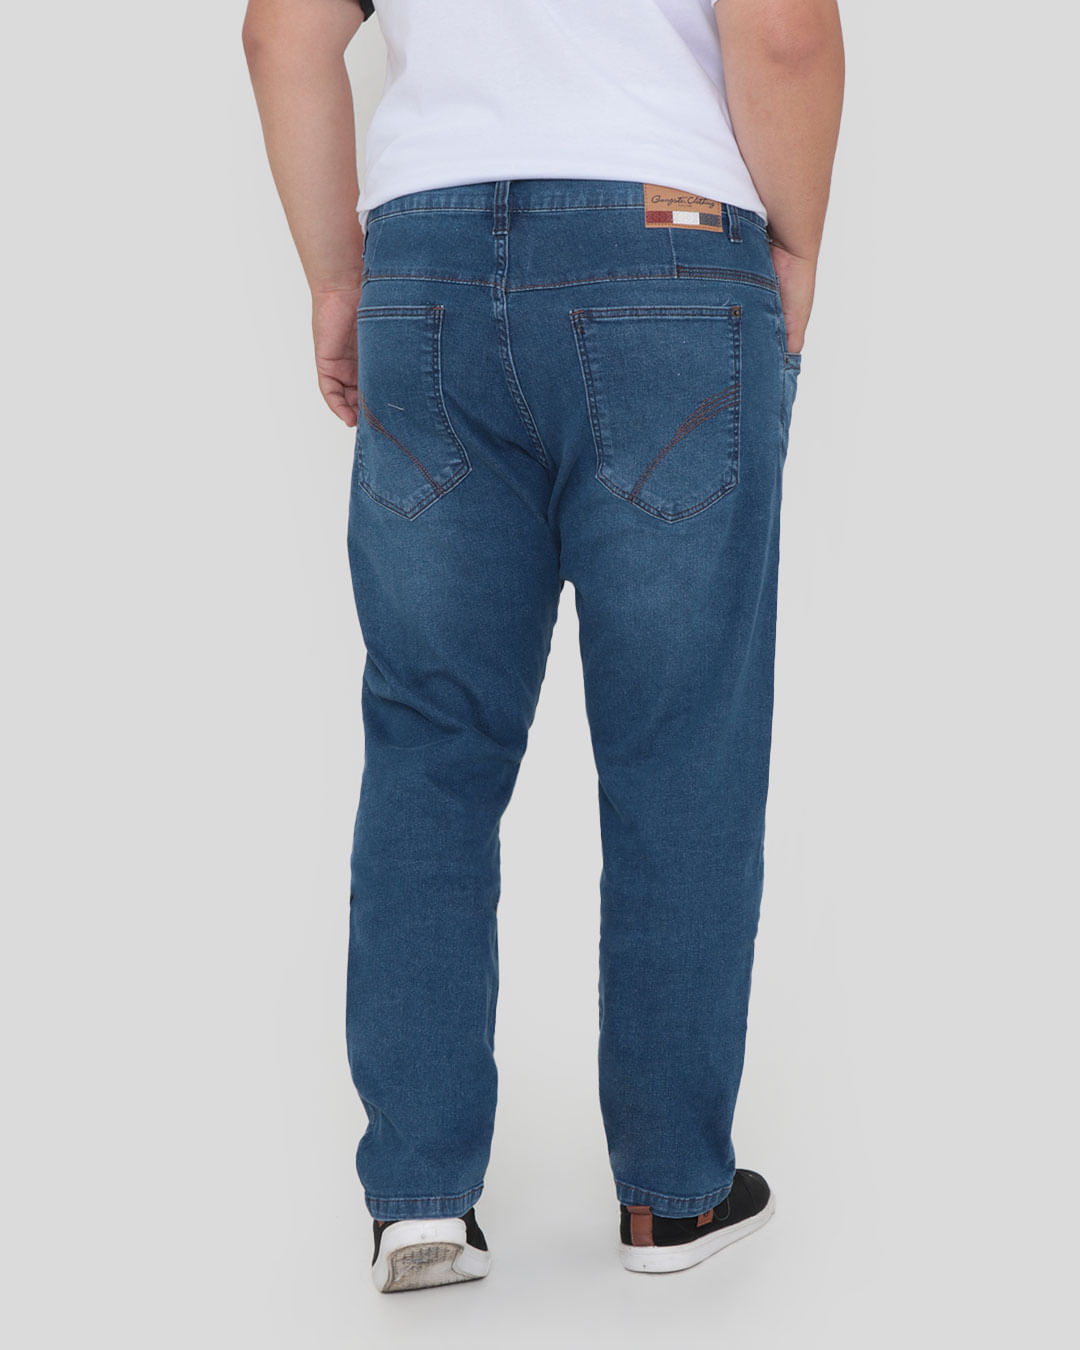 23321000198045-blue-jeans-medio-3